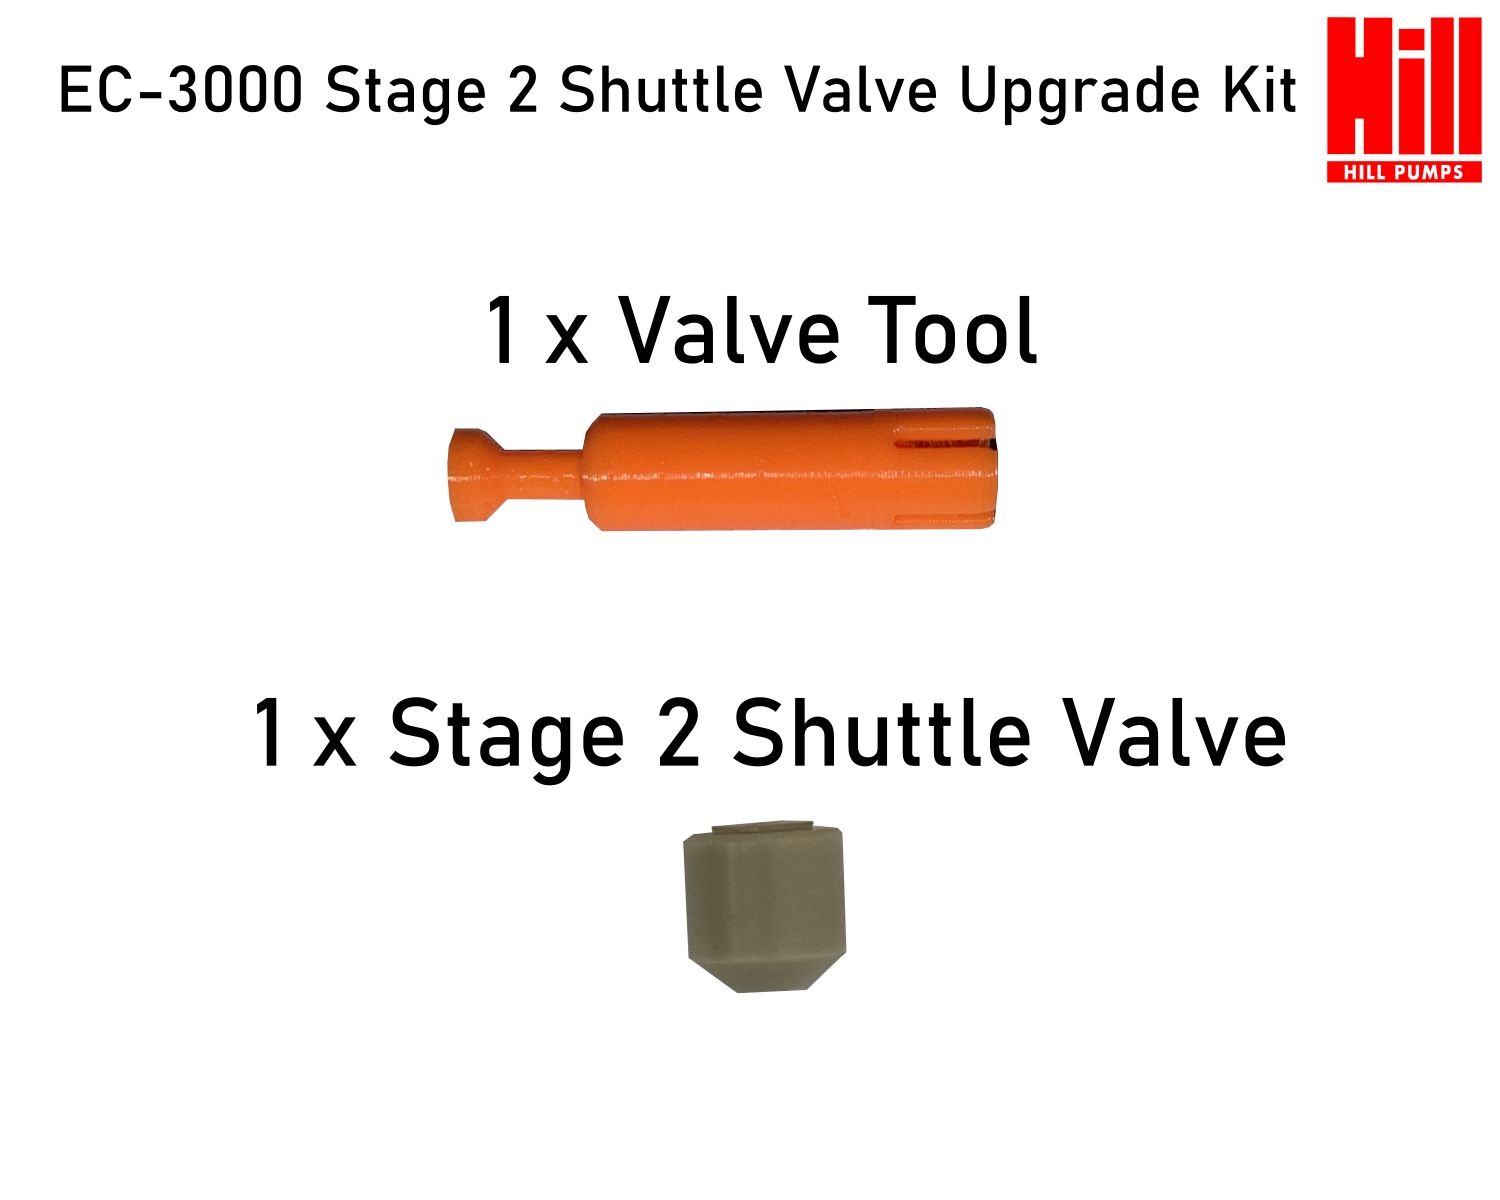 EC-3000 Stage 2 Shuttle Valve Upgrade Kit